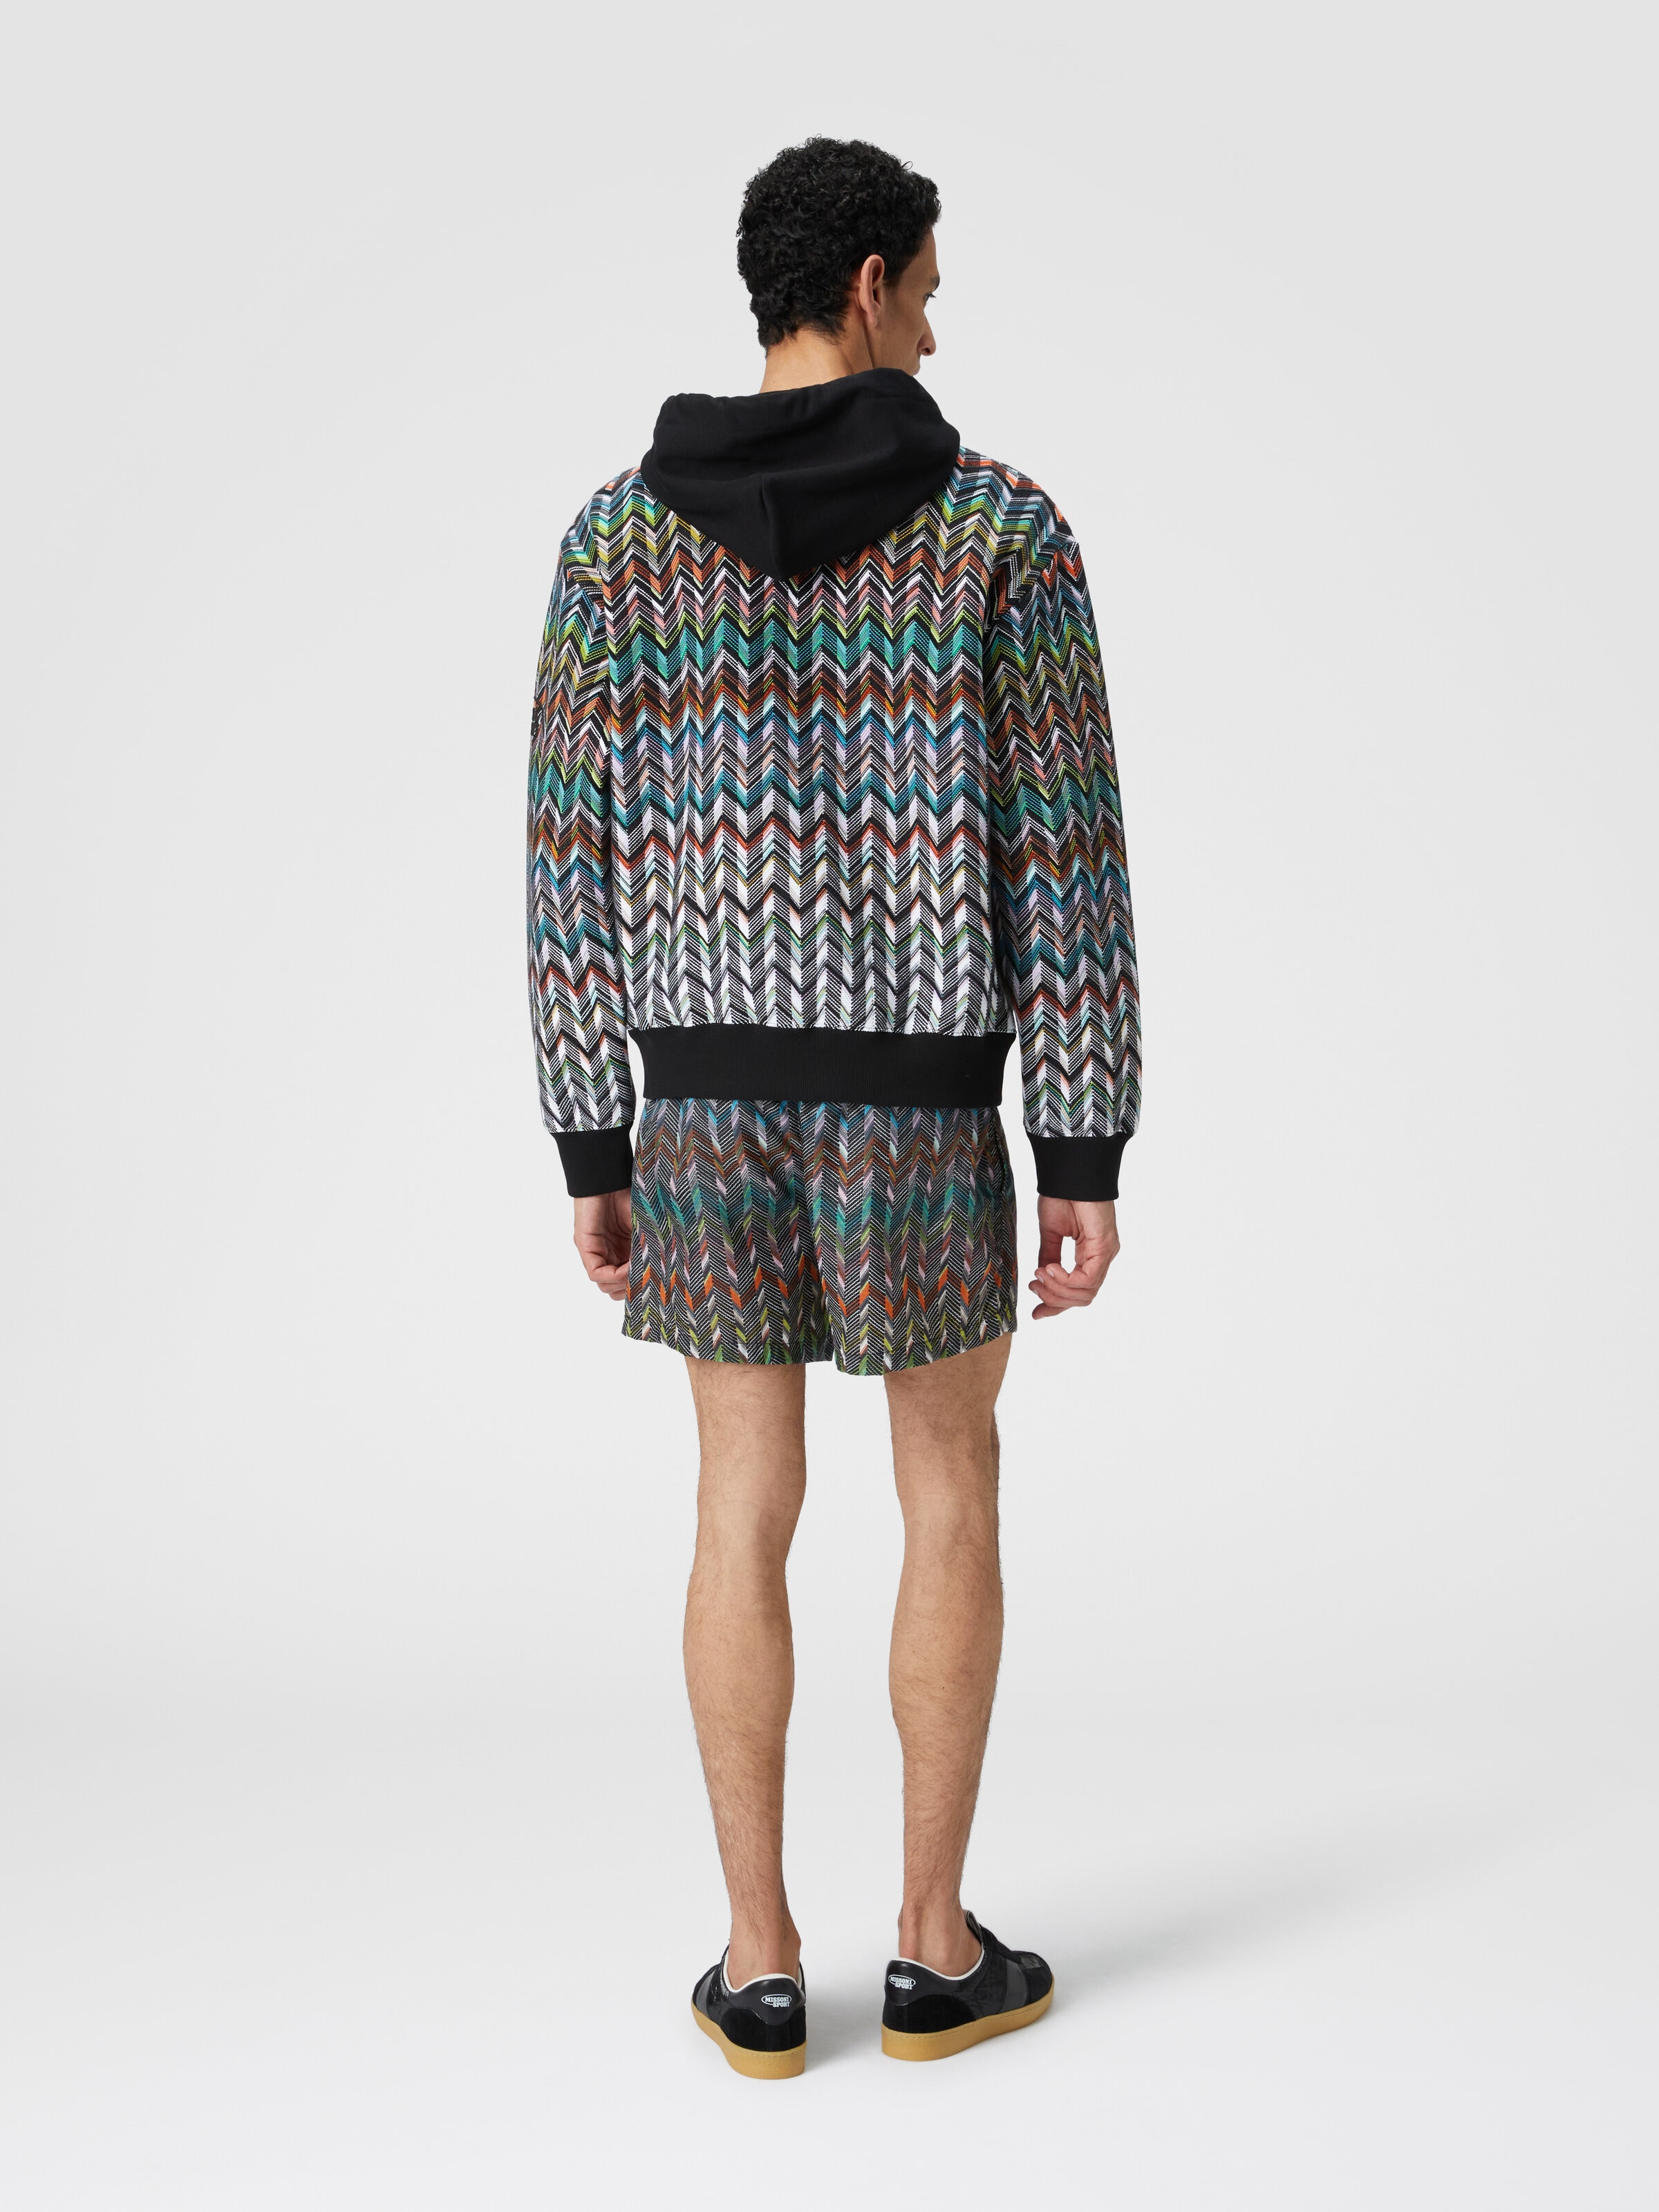 Hooded sweatshirt in zigzag knit , Multicoloured  - 2